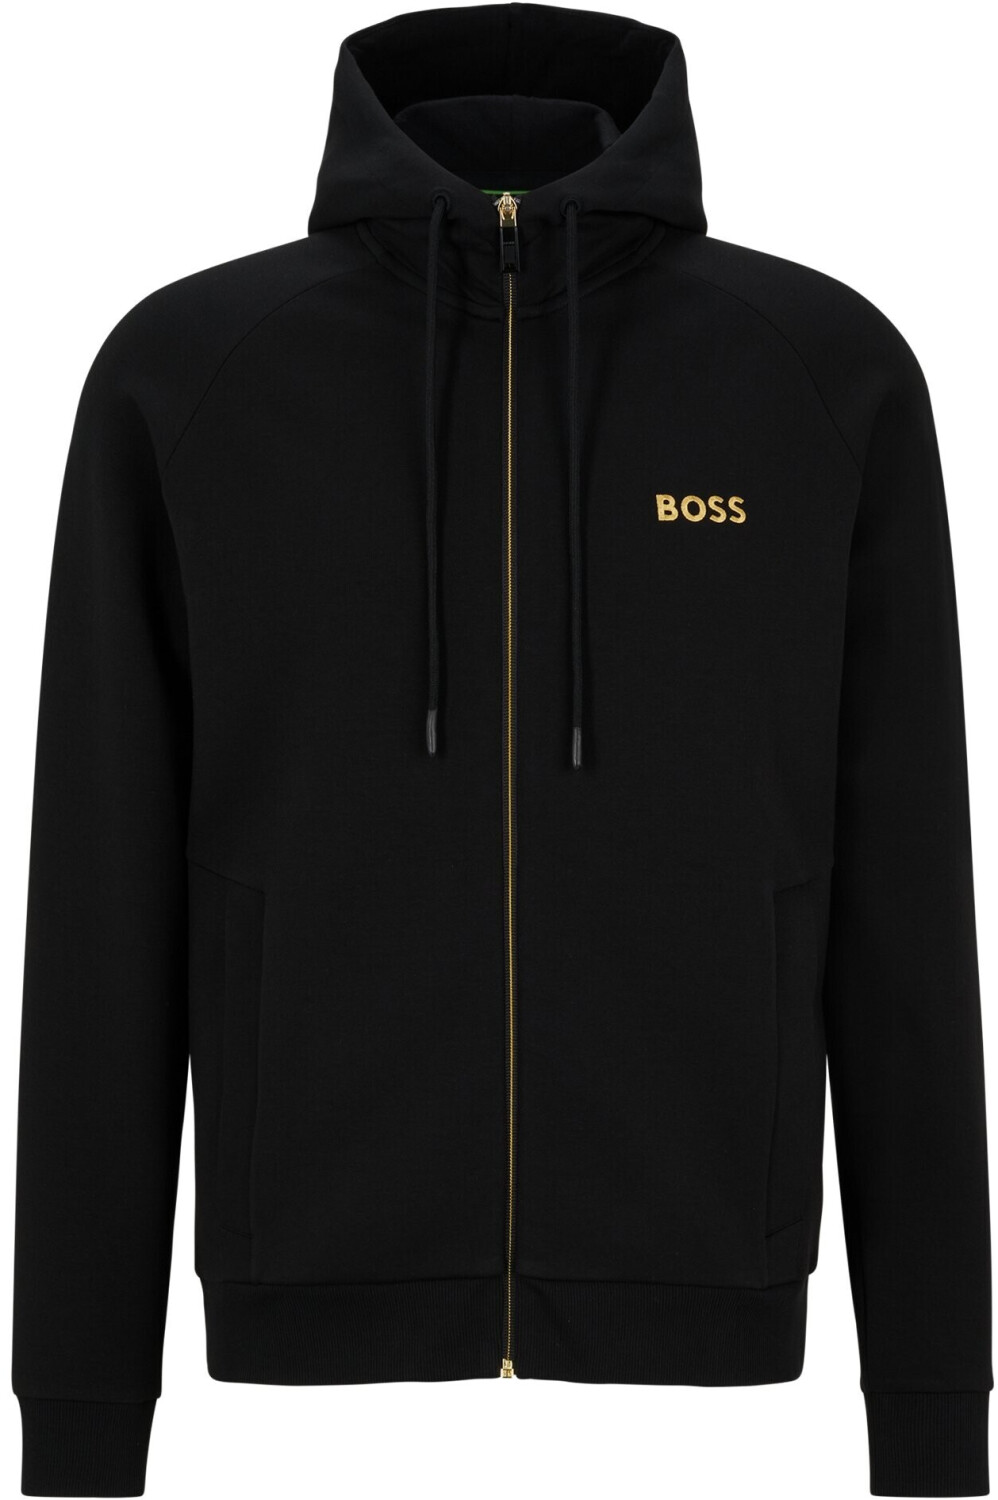 Hugo Boss Saggy 1 Sweater black (50482888-001) ab 138,99 ... pic